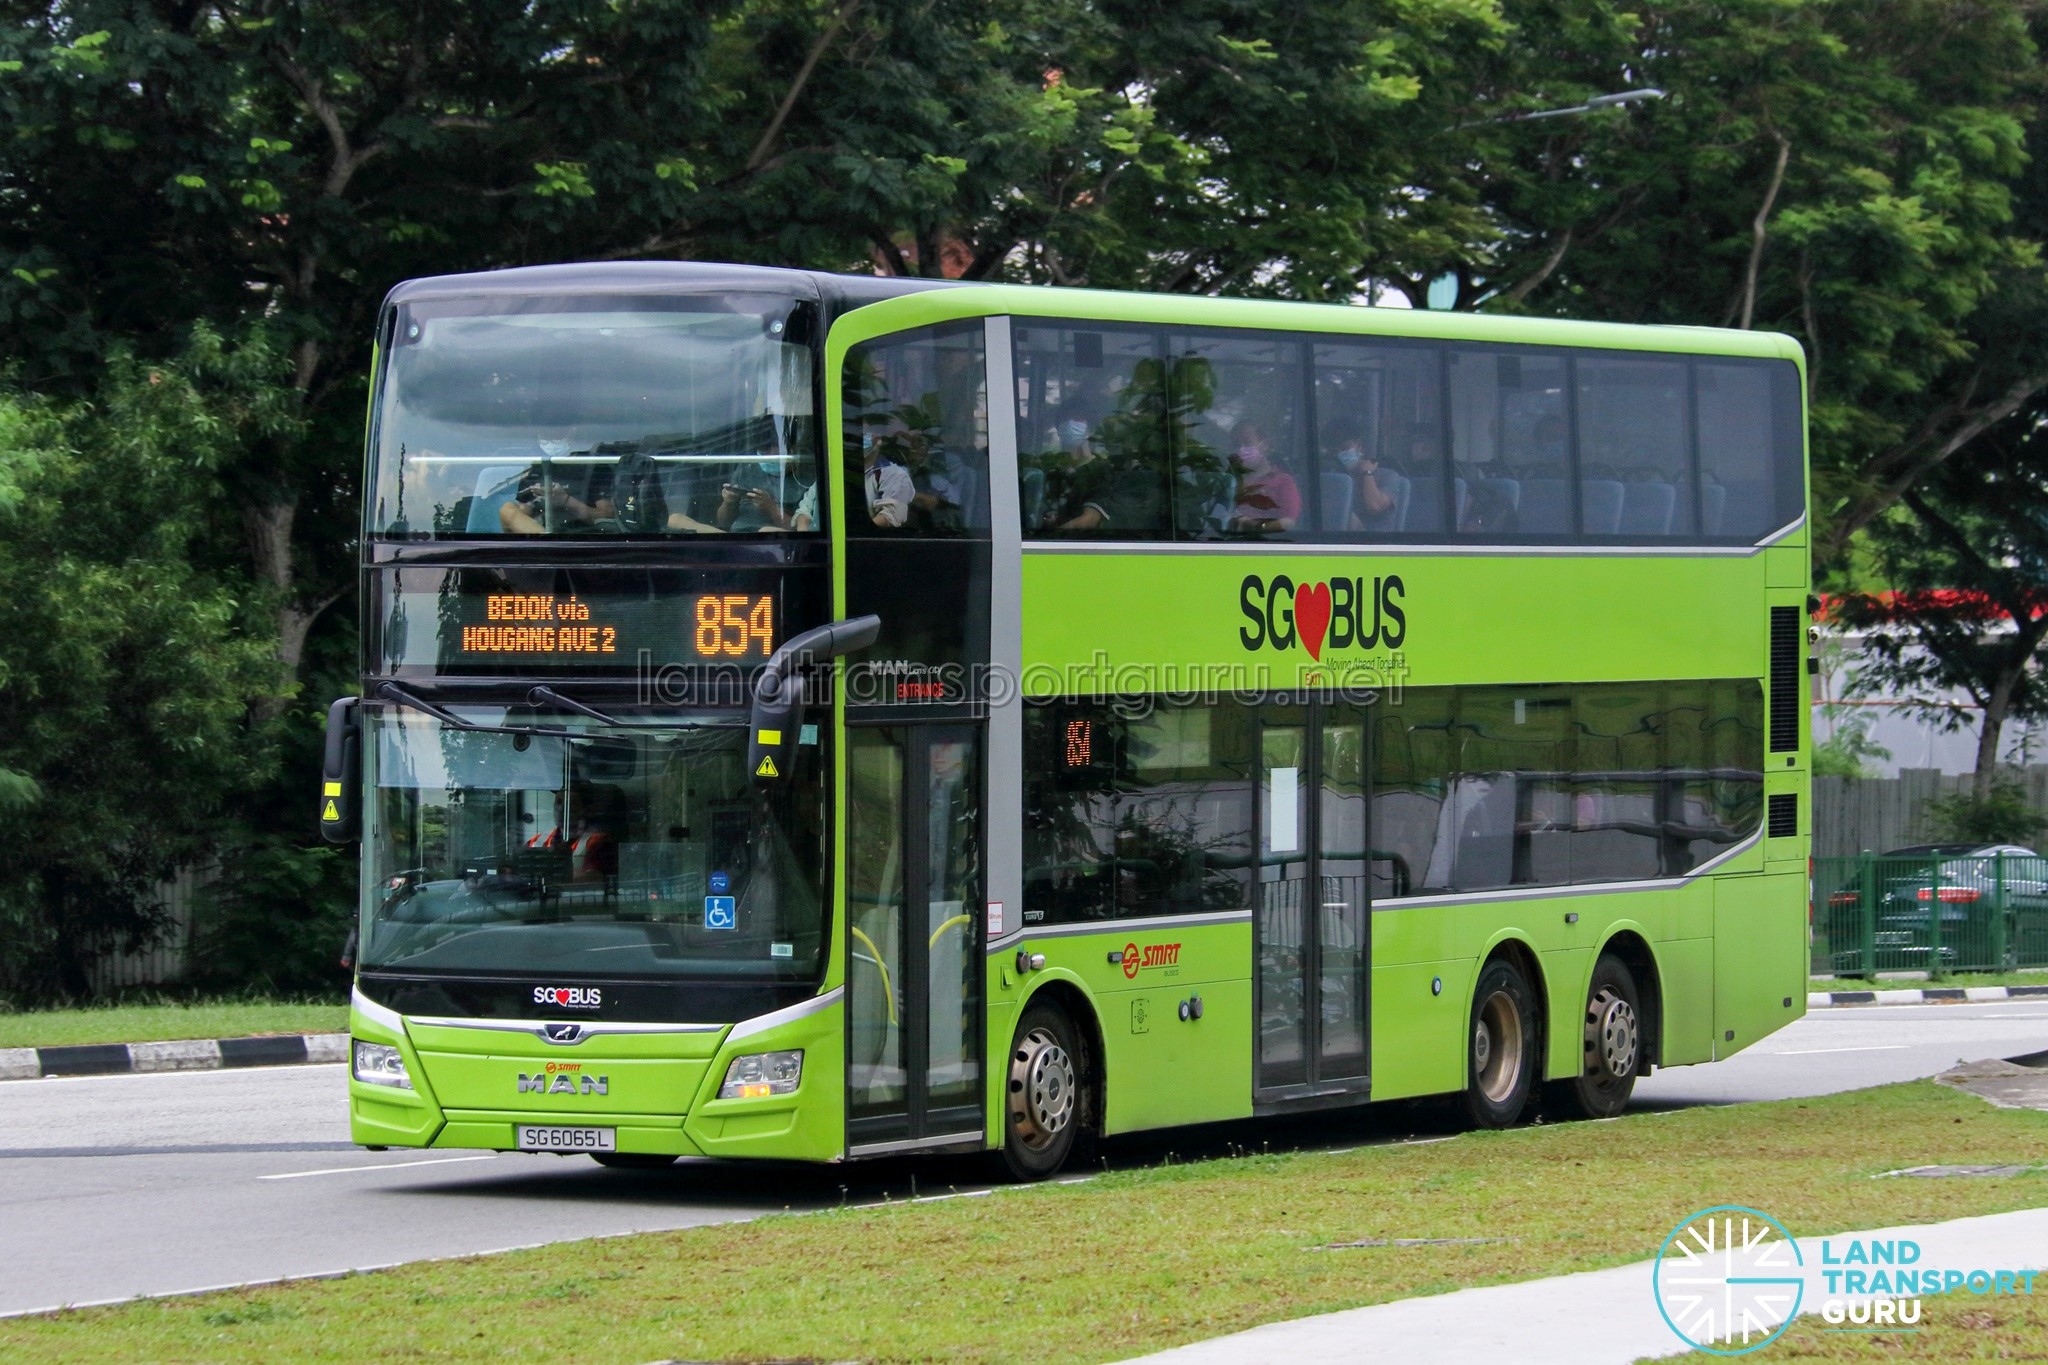 bus-854-smrt-buses-man-a95-euro-6-sg6065l-land-transport-guru